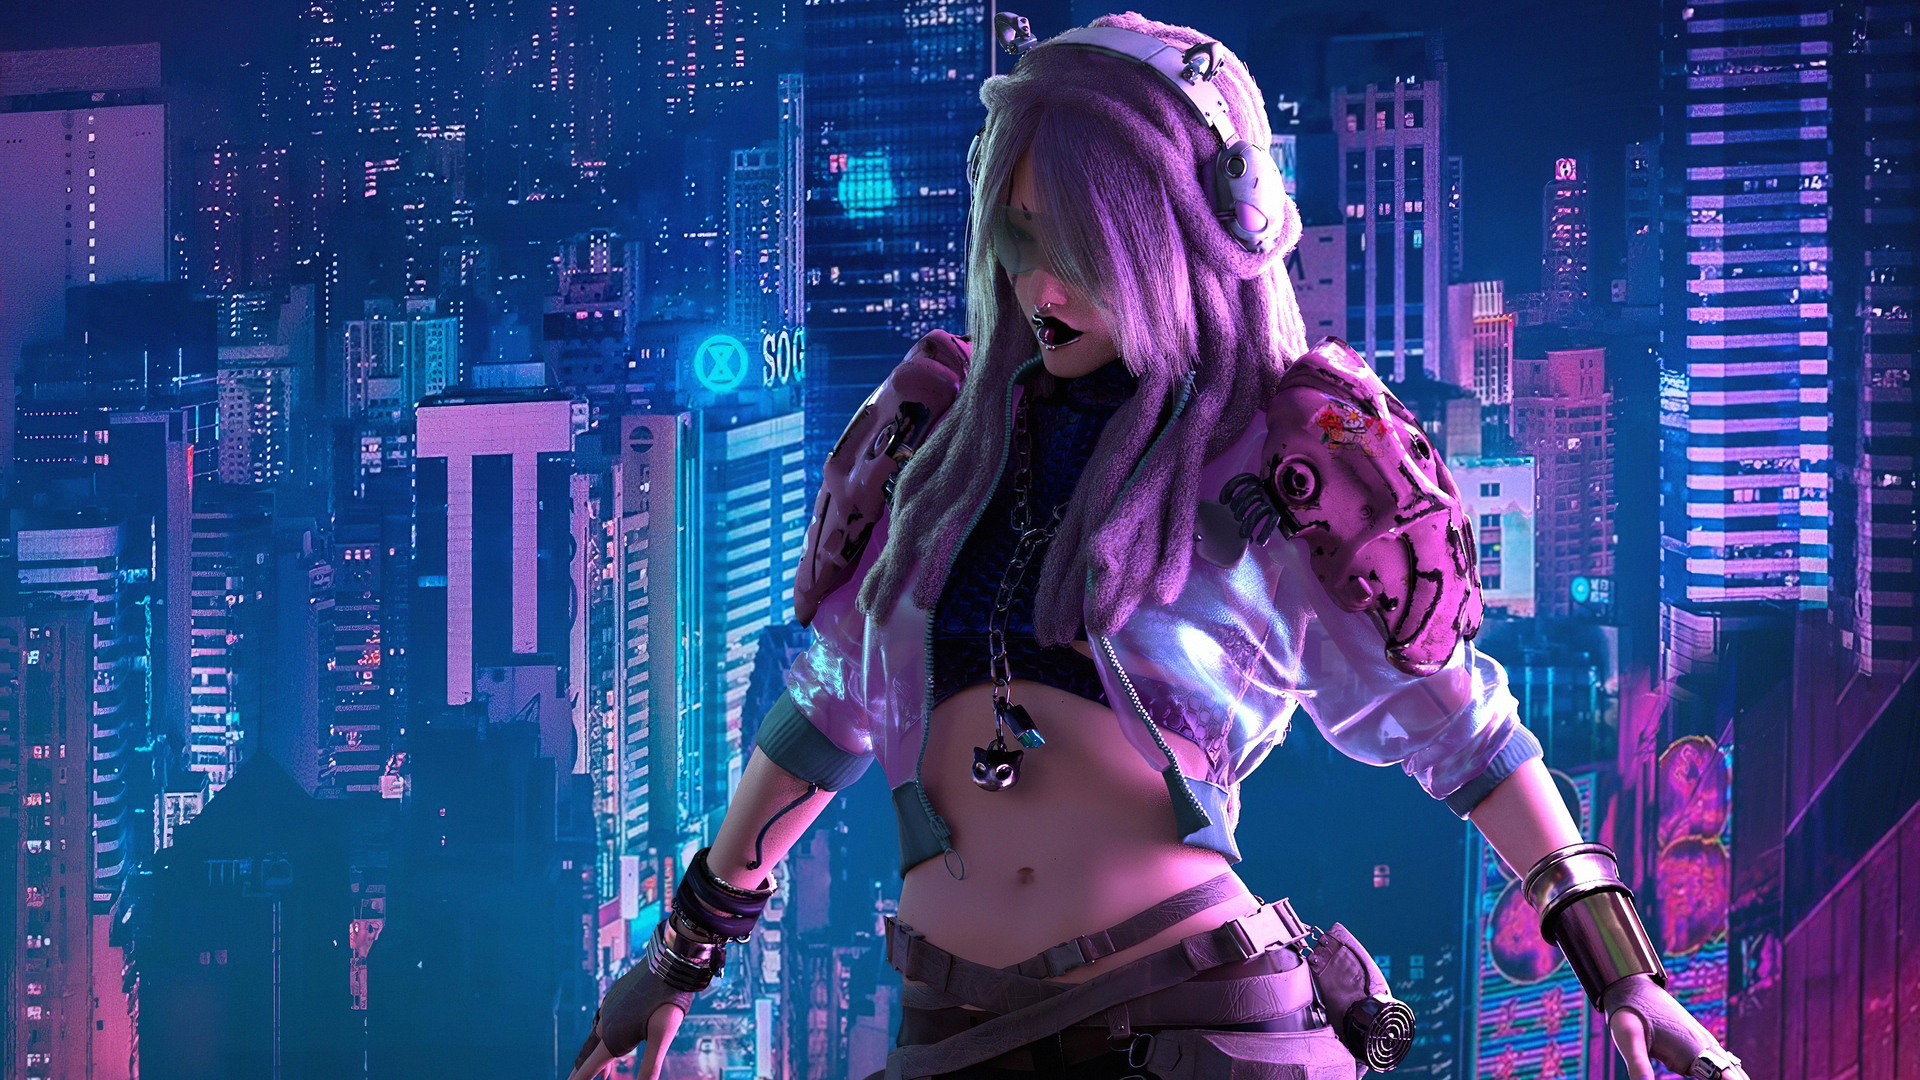 Cyberpunk girl in city - backiee